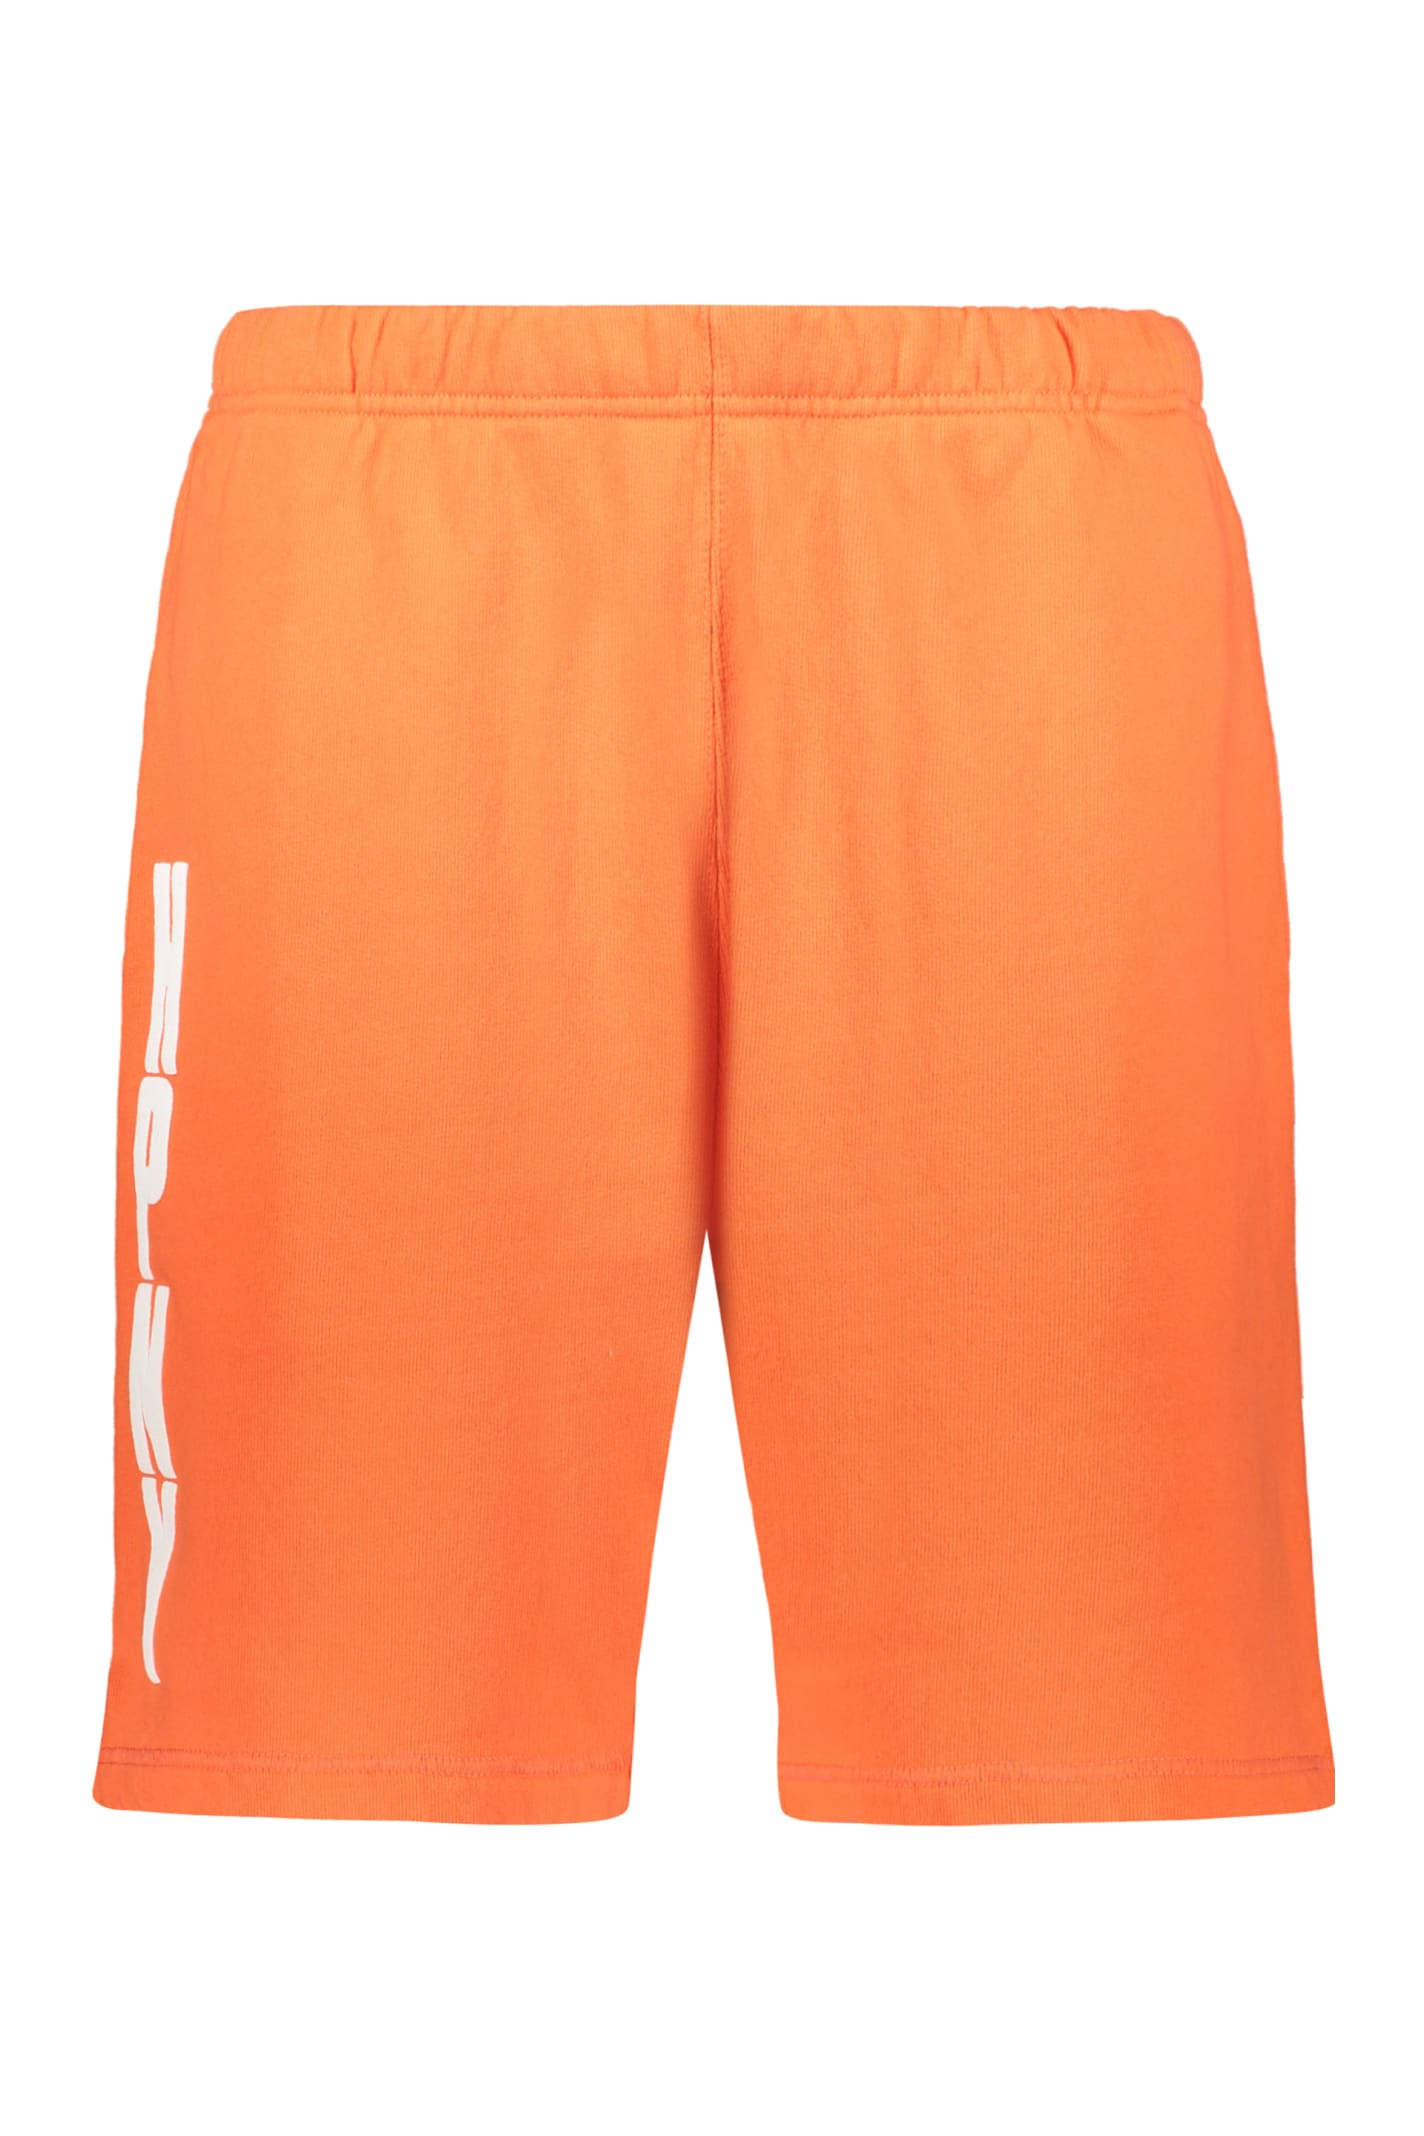 Heron Preston Cotton Bermuda Shorts In Orange